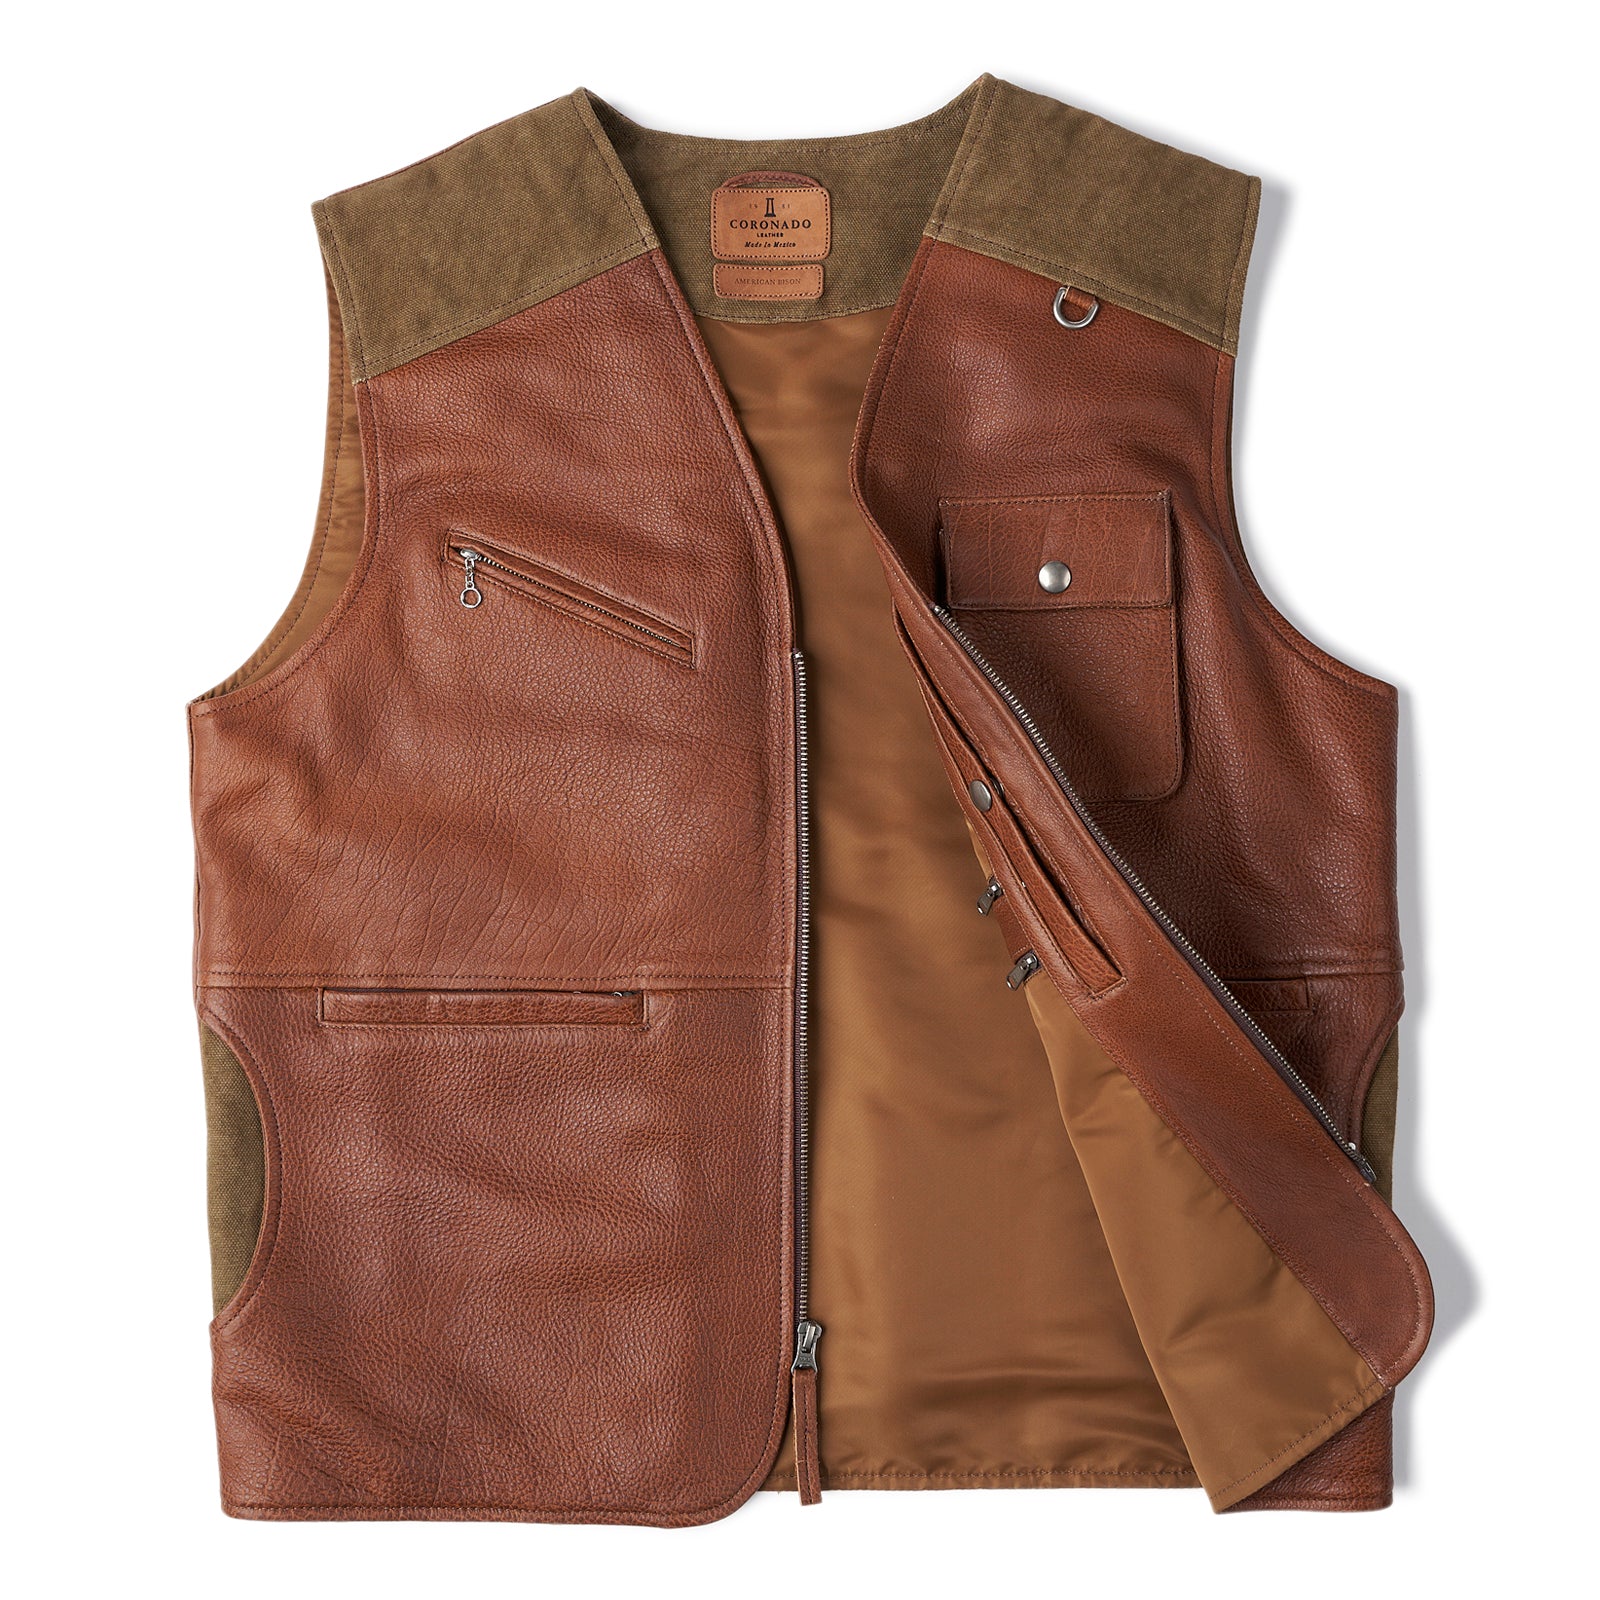 Bison Leather — Vest Safari Coronado Travel